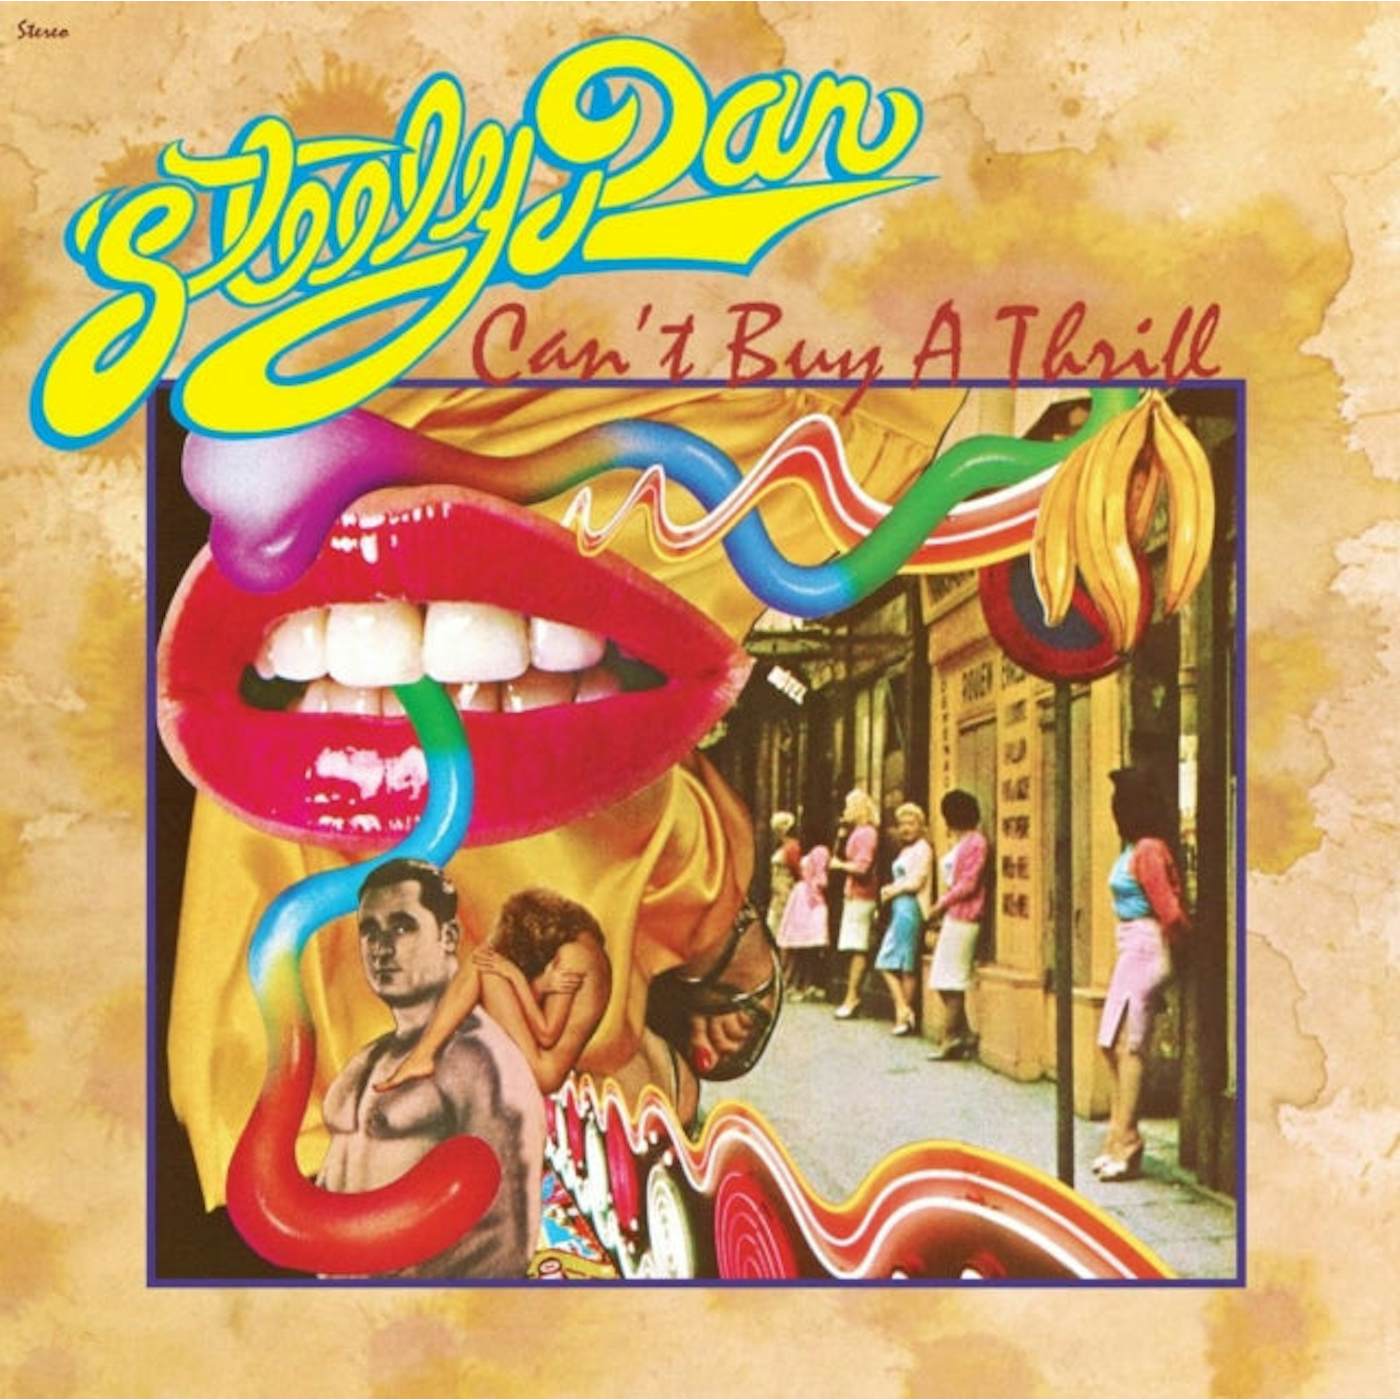 Steely Dan LP - Can't Buy A Thrill (Vinyl)